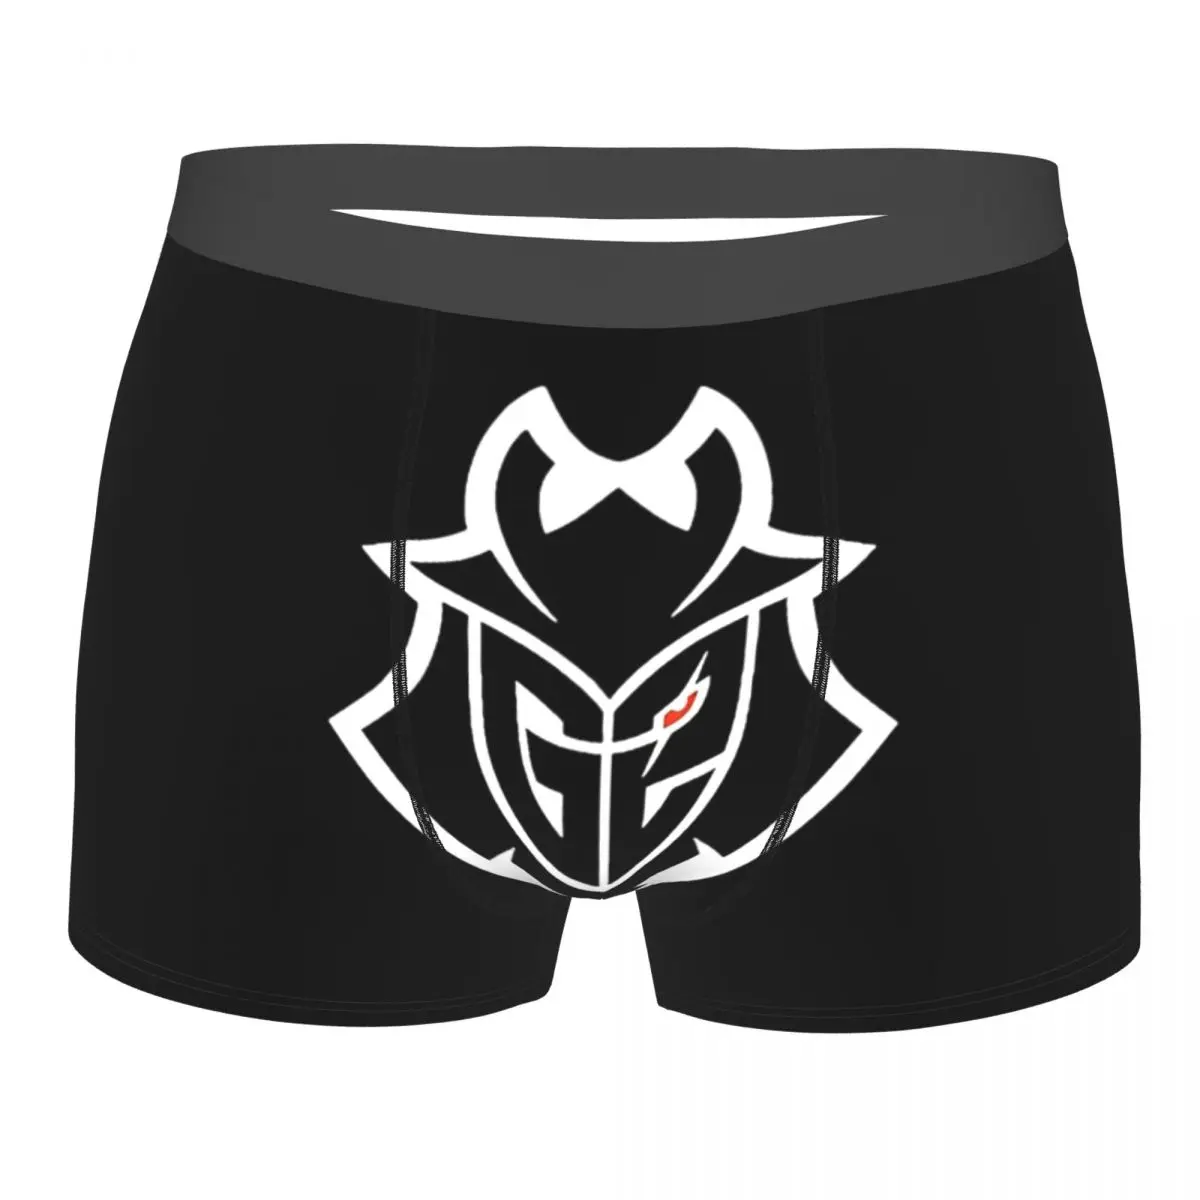 

G2 Esports Apex Legends Shooter Battle Royale Game Underpants Homme Panties Male Underwear Ventilate